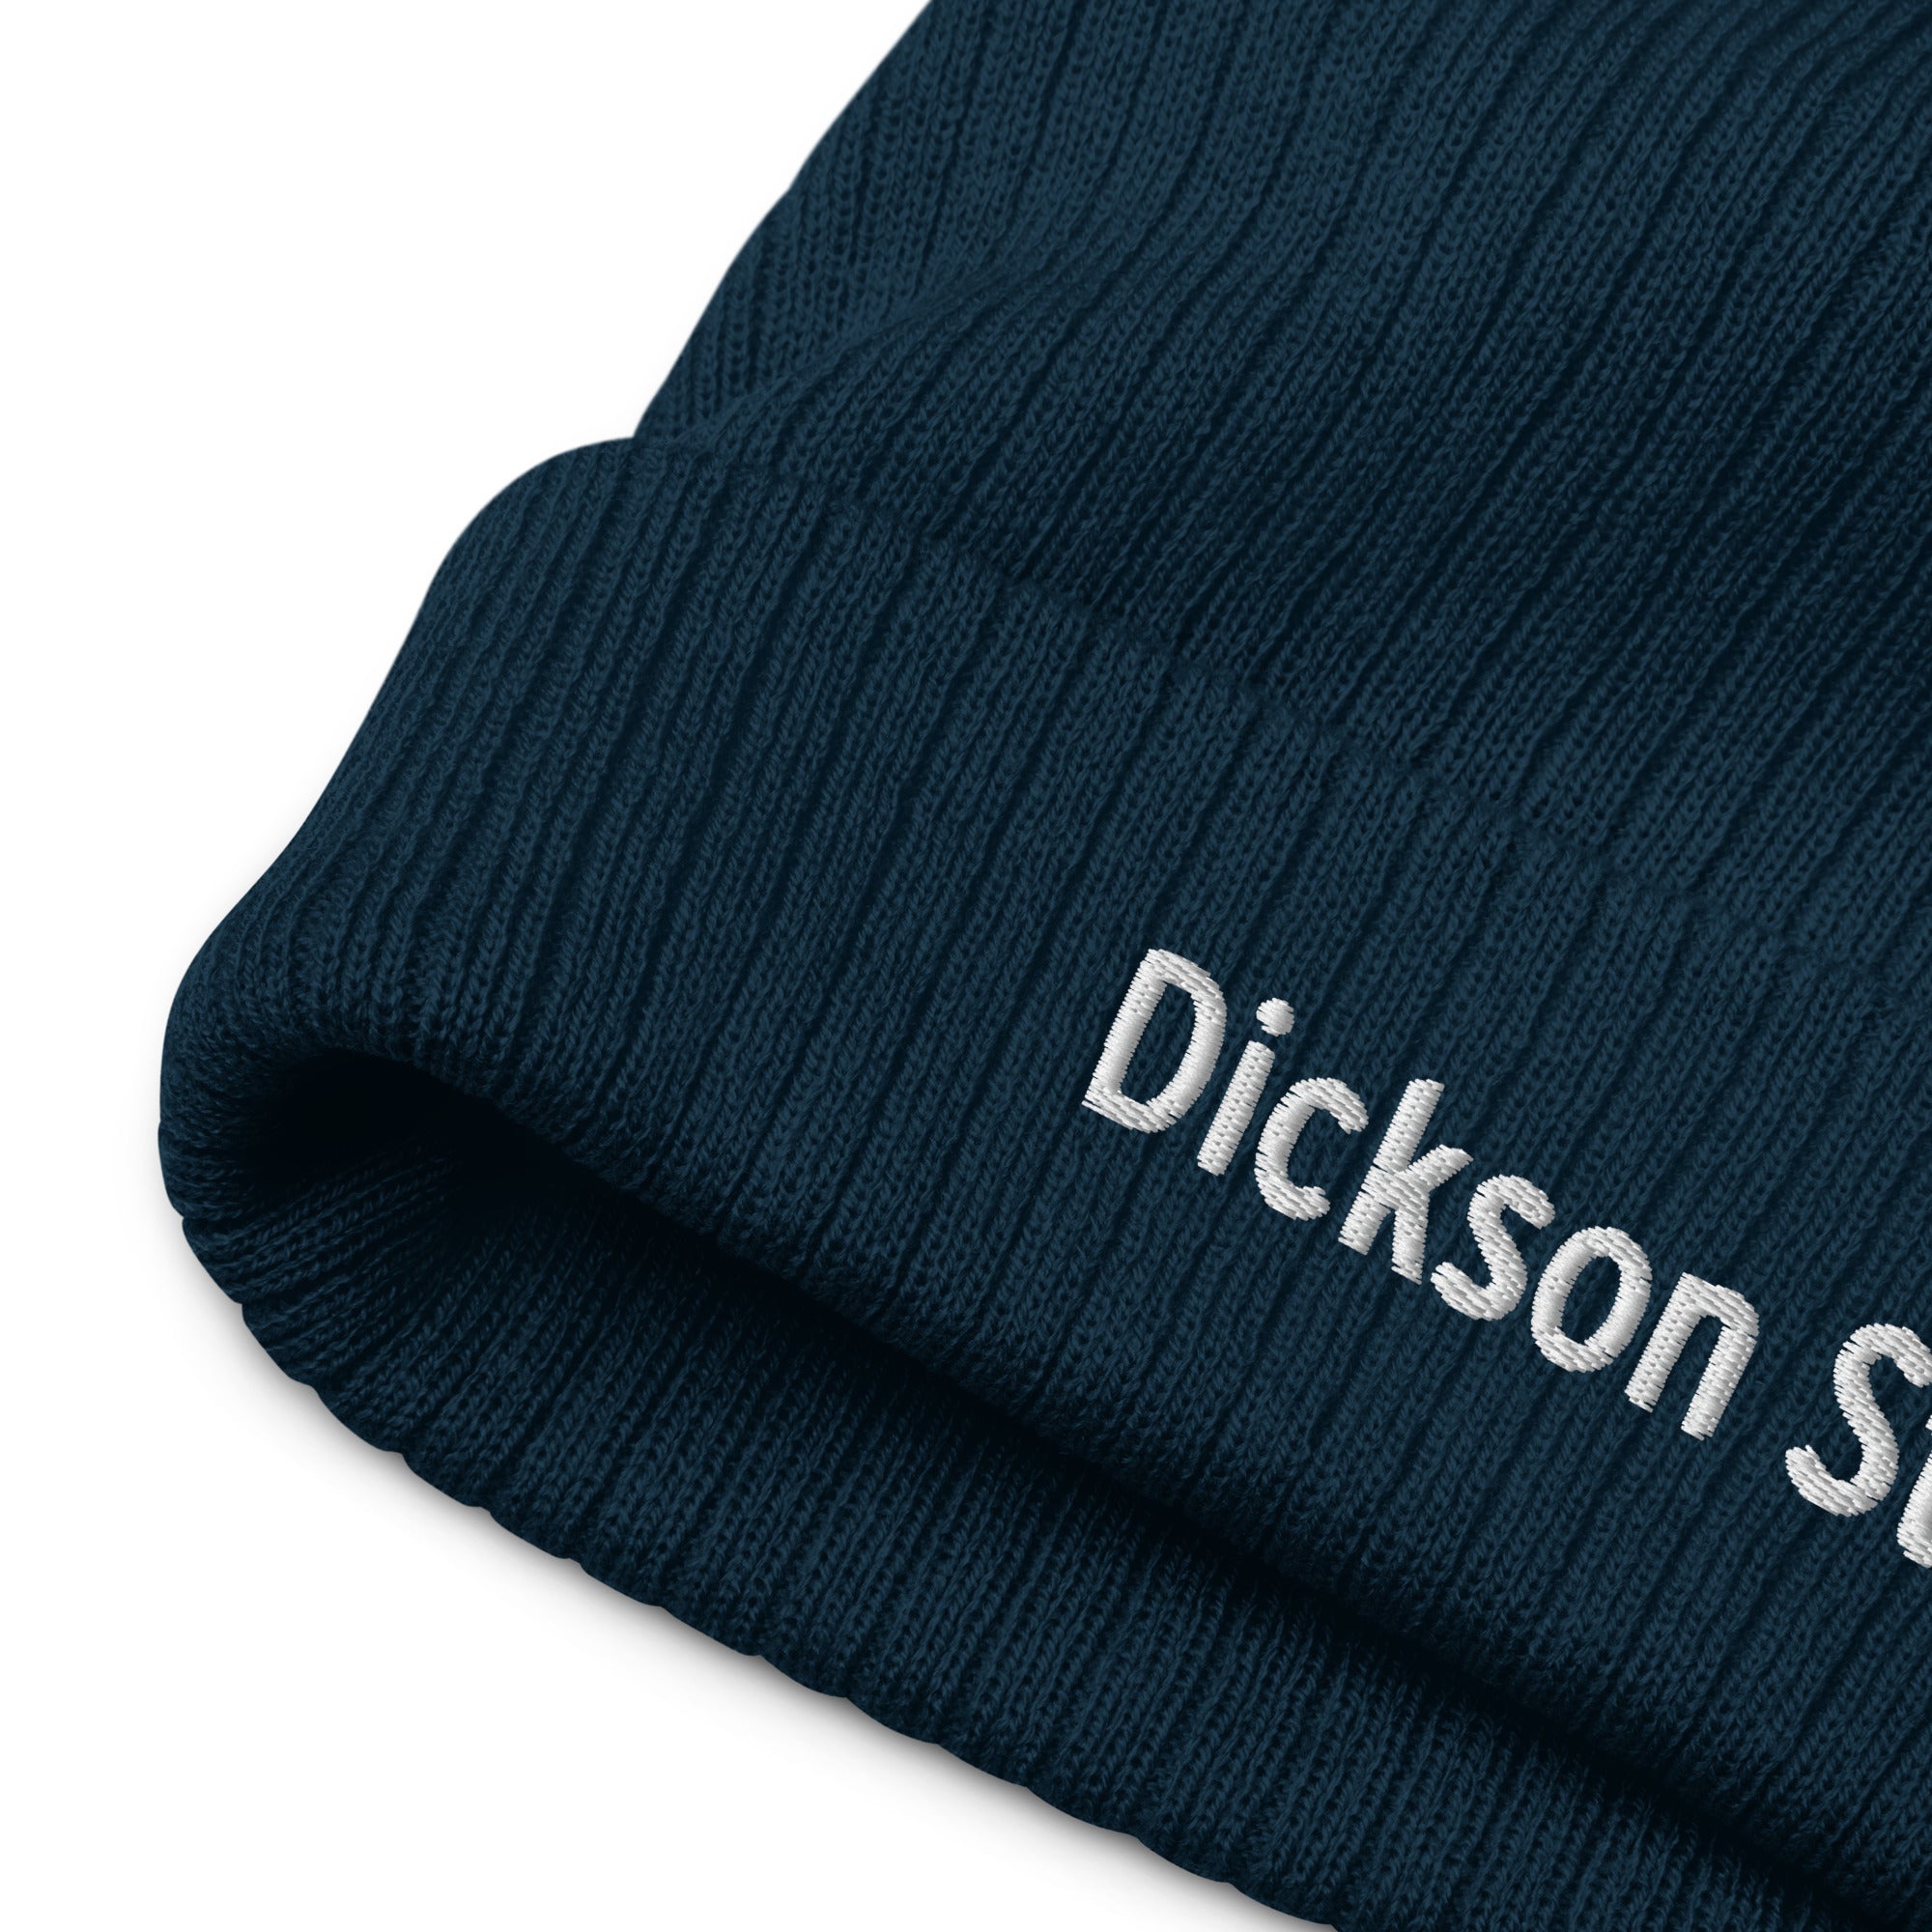 Dickson St Ribbed Knit Beanie